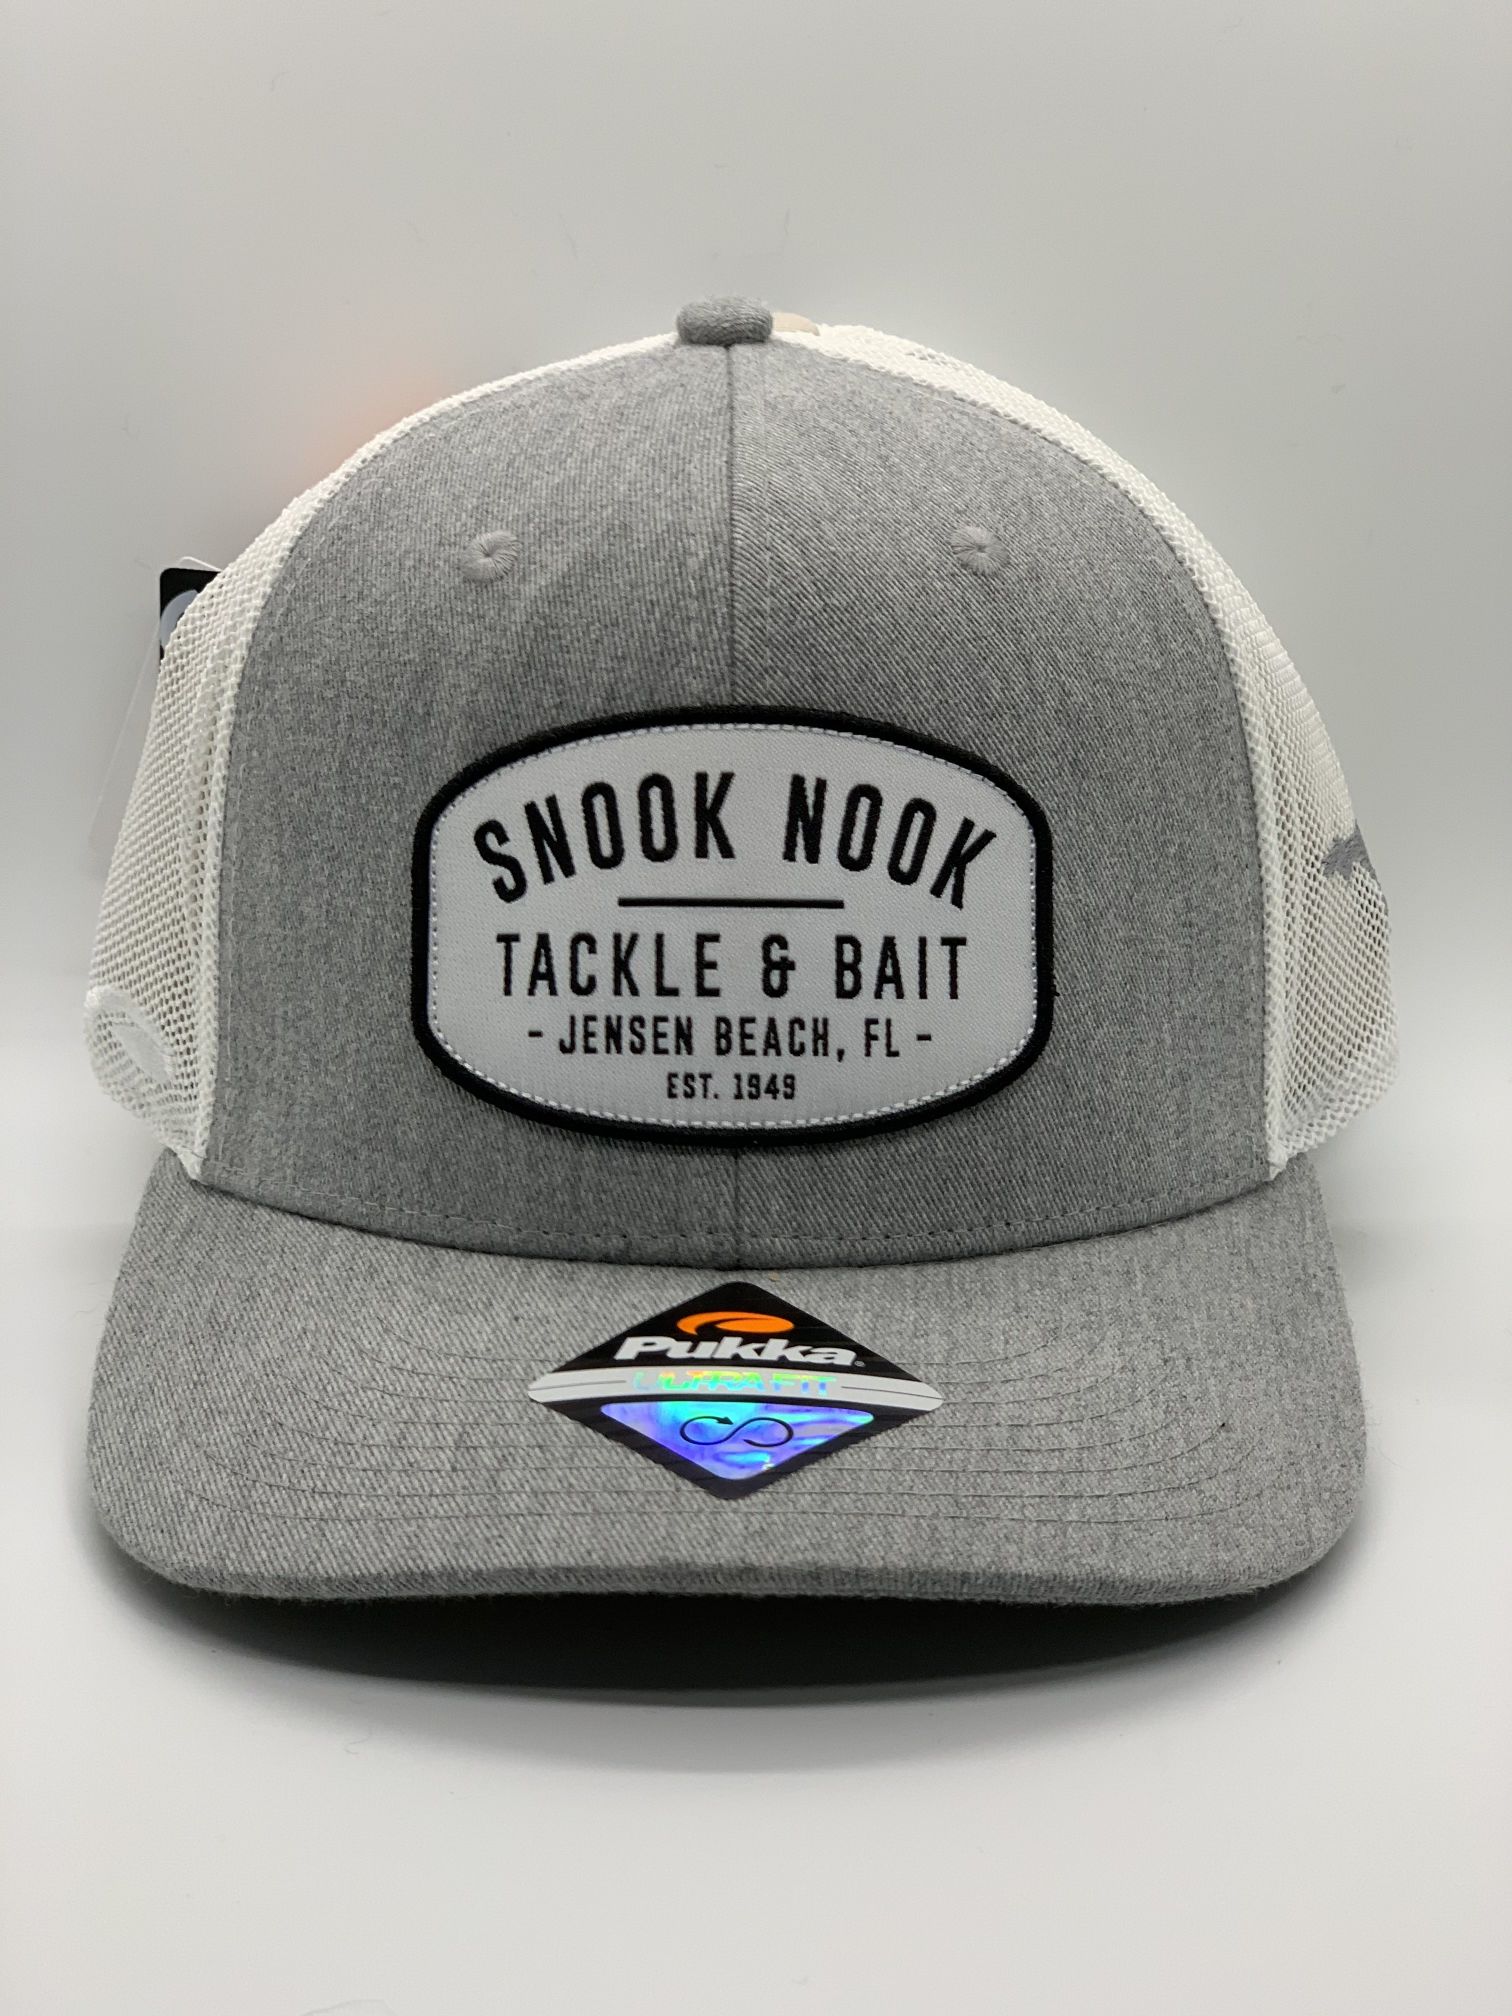 Snook Nook Tackle & Bait Mesh Snapback - Snook Nook Bait & Tackle